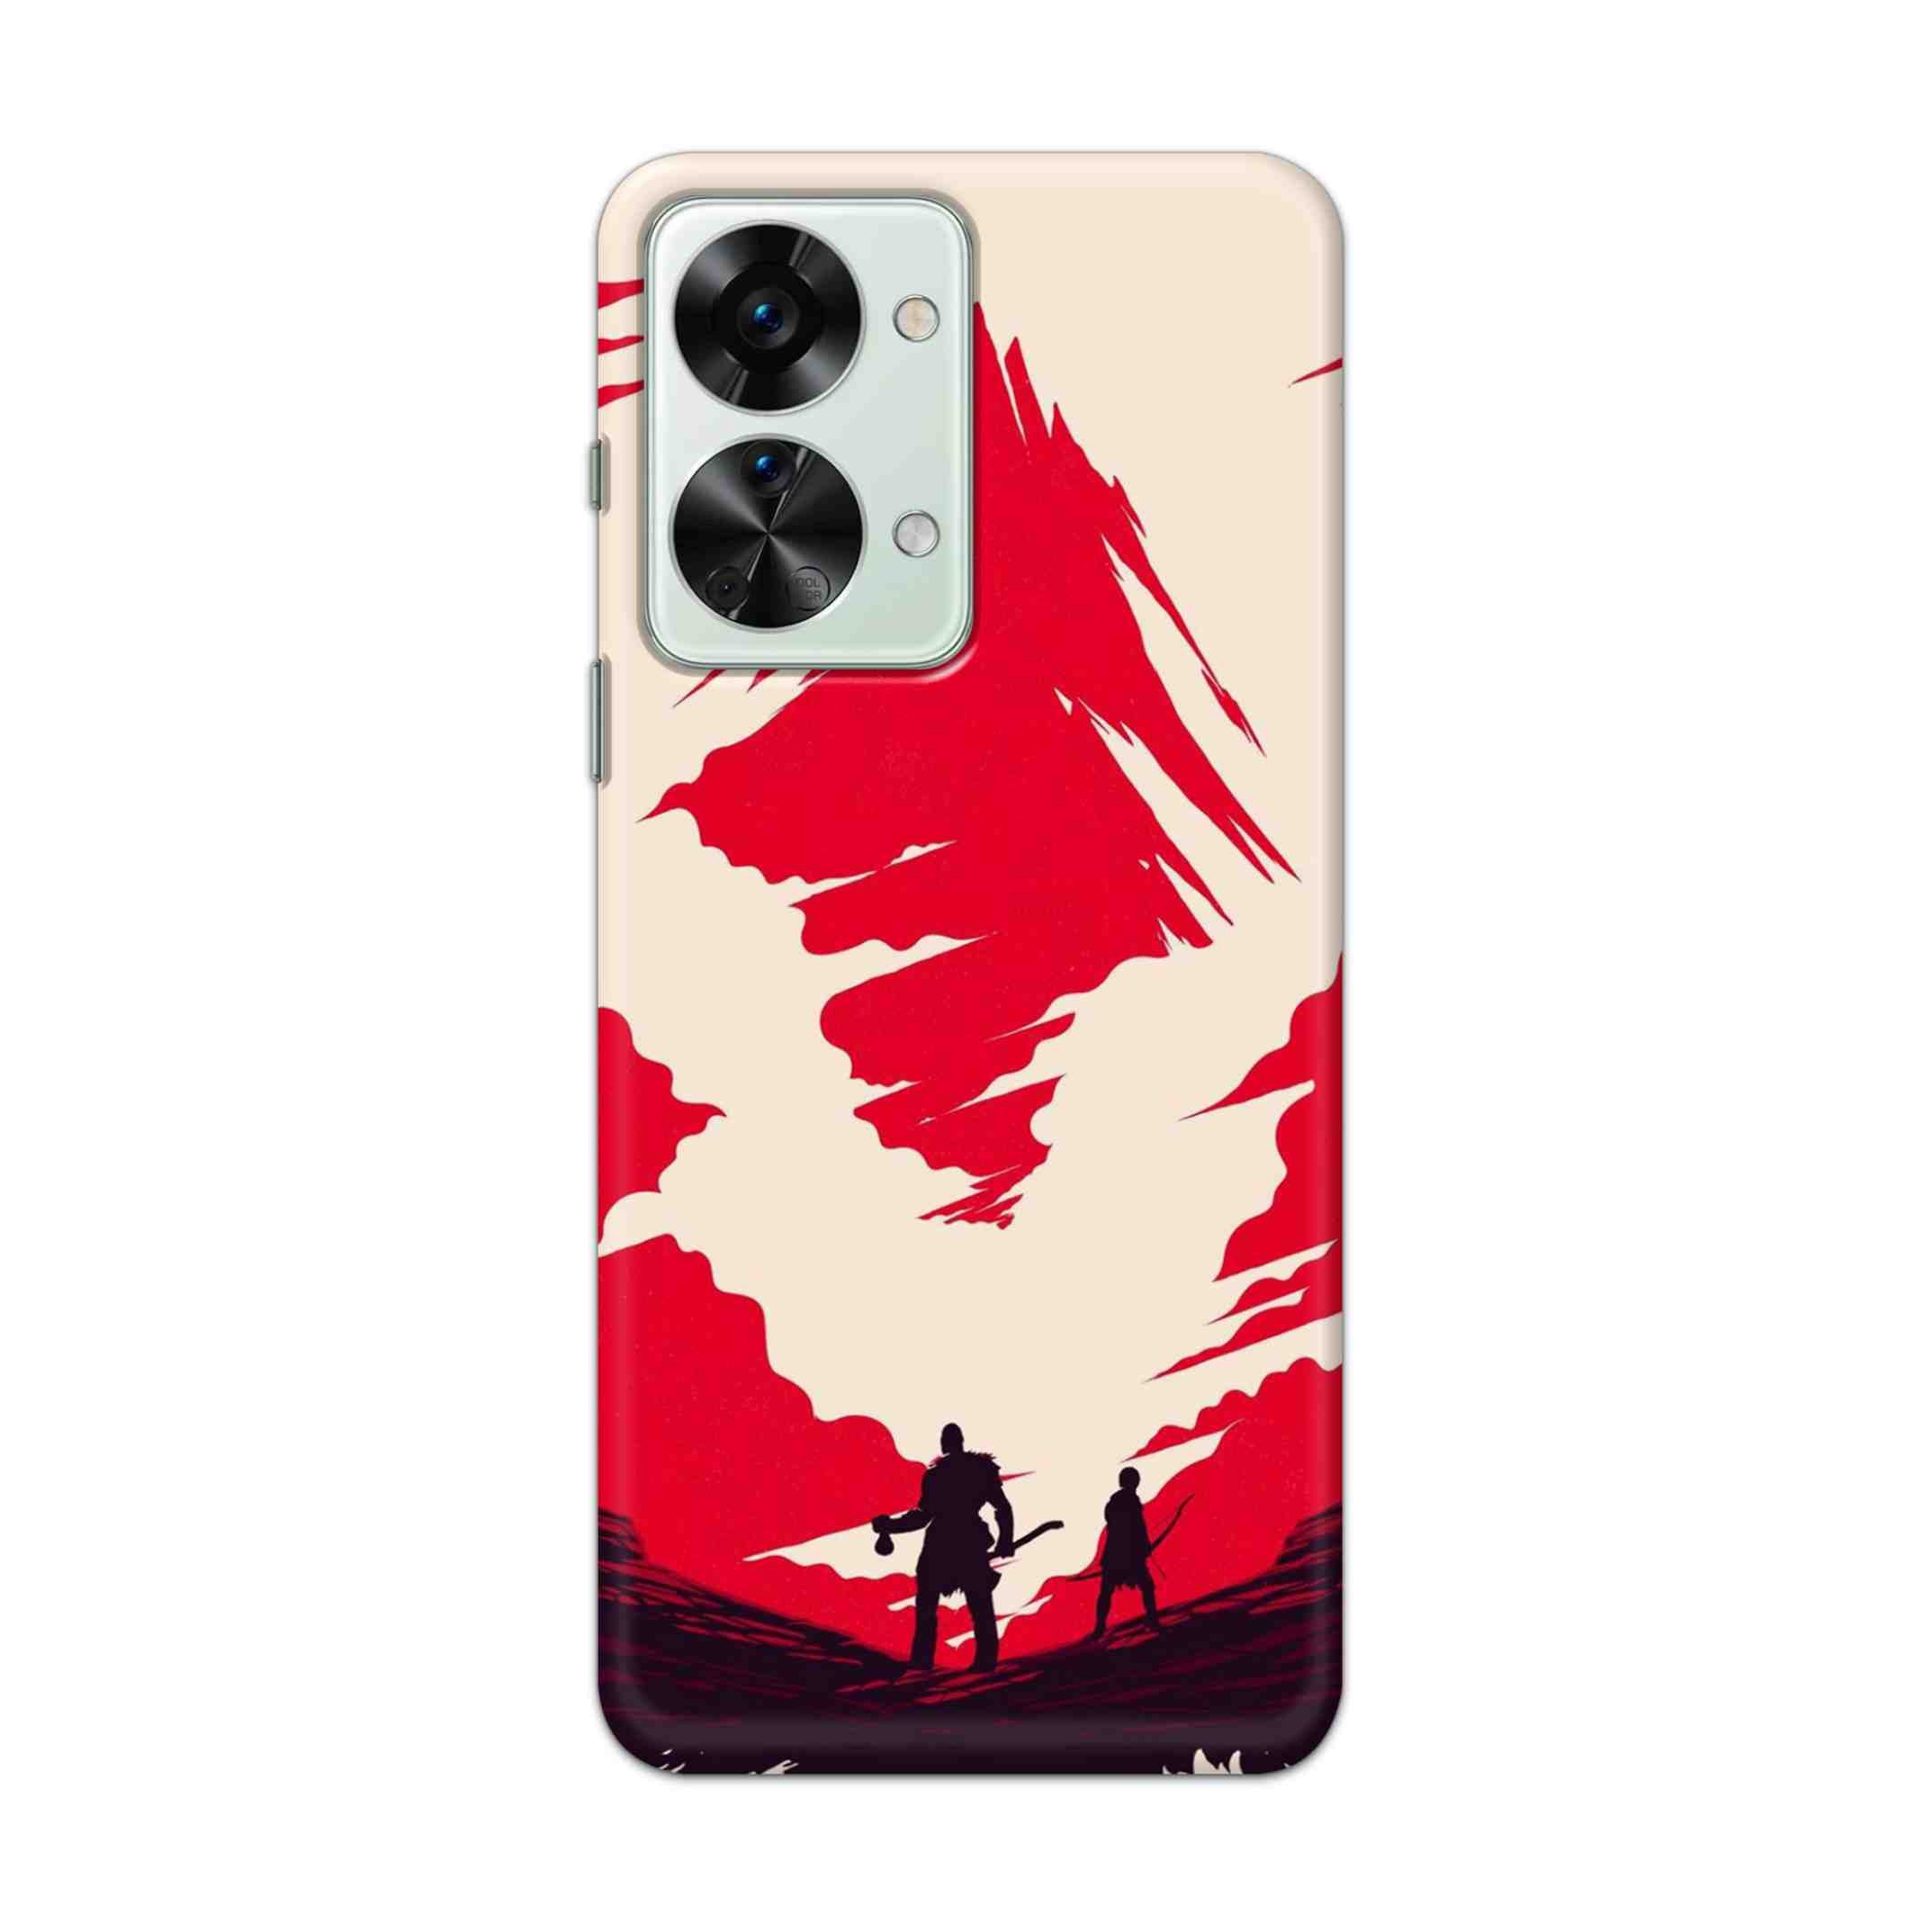 Buy God Of War Art Hard Back Mobile Phone Case Cover For OnePlus Nord 2T 5G Online